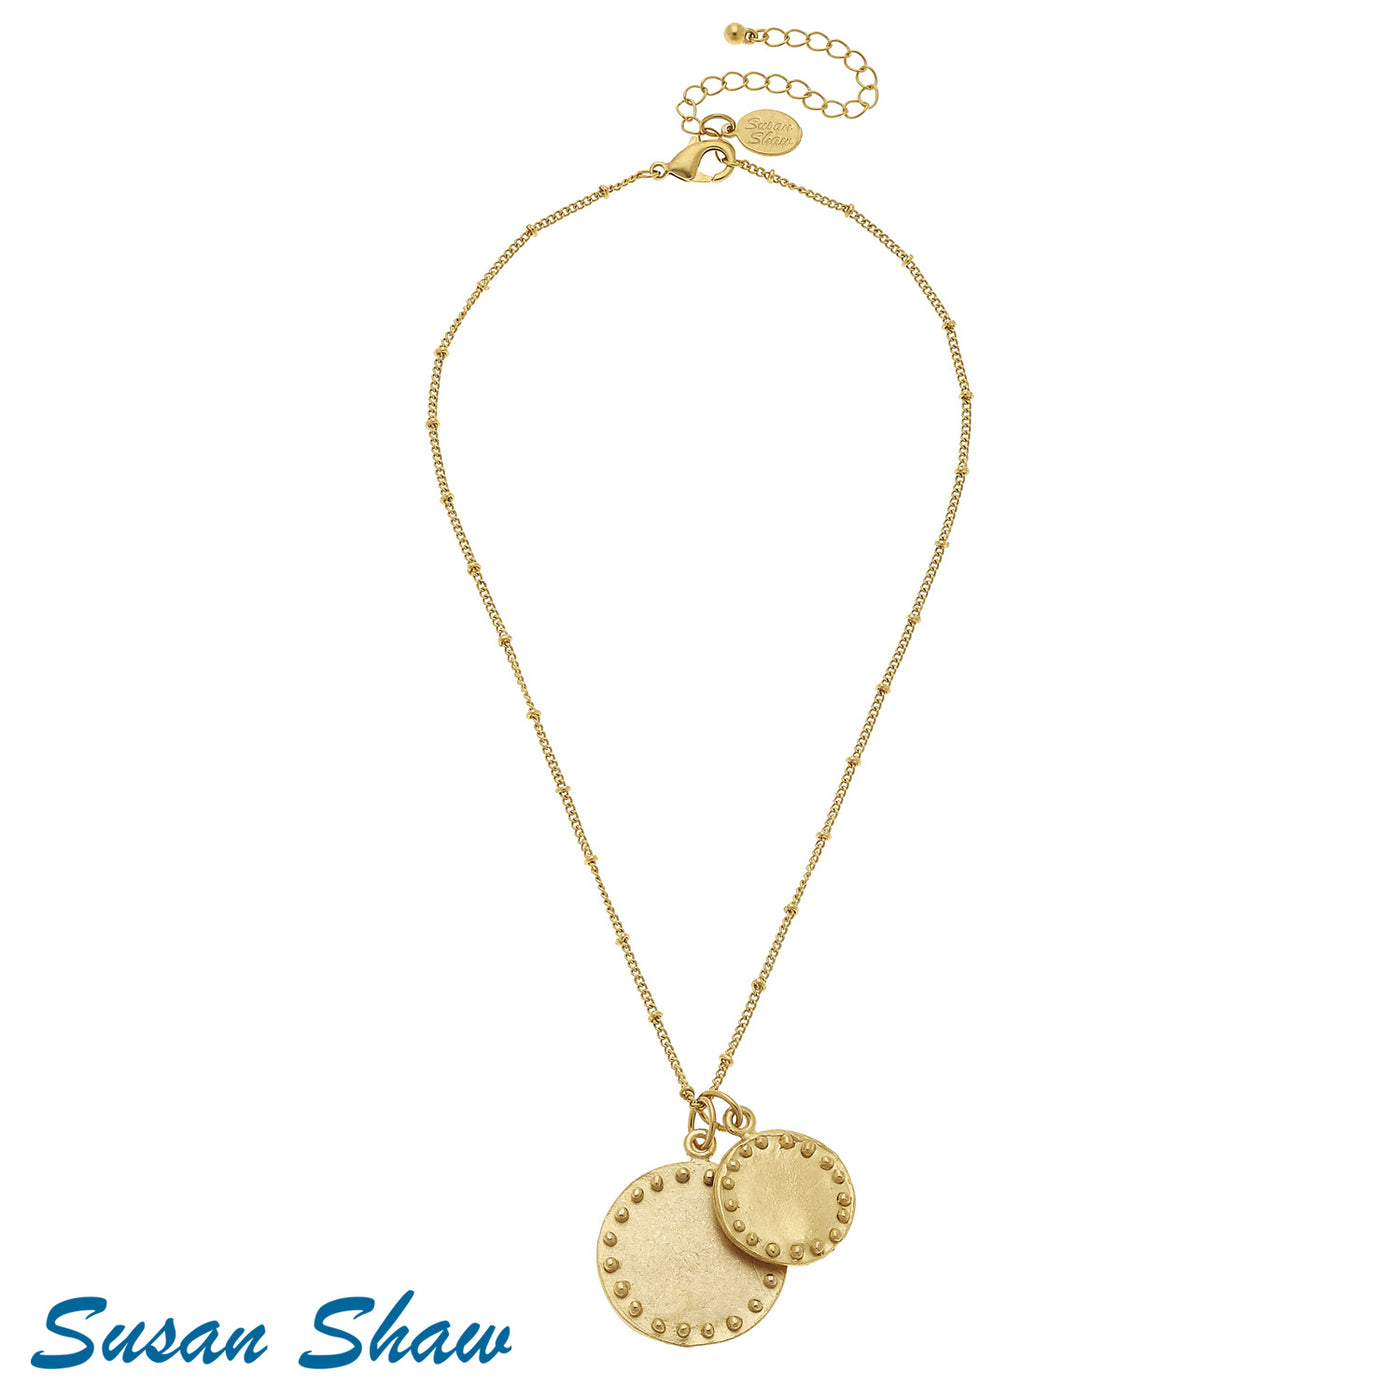 Susan Shaw Double Circle Necklace